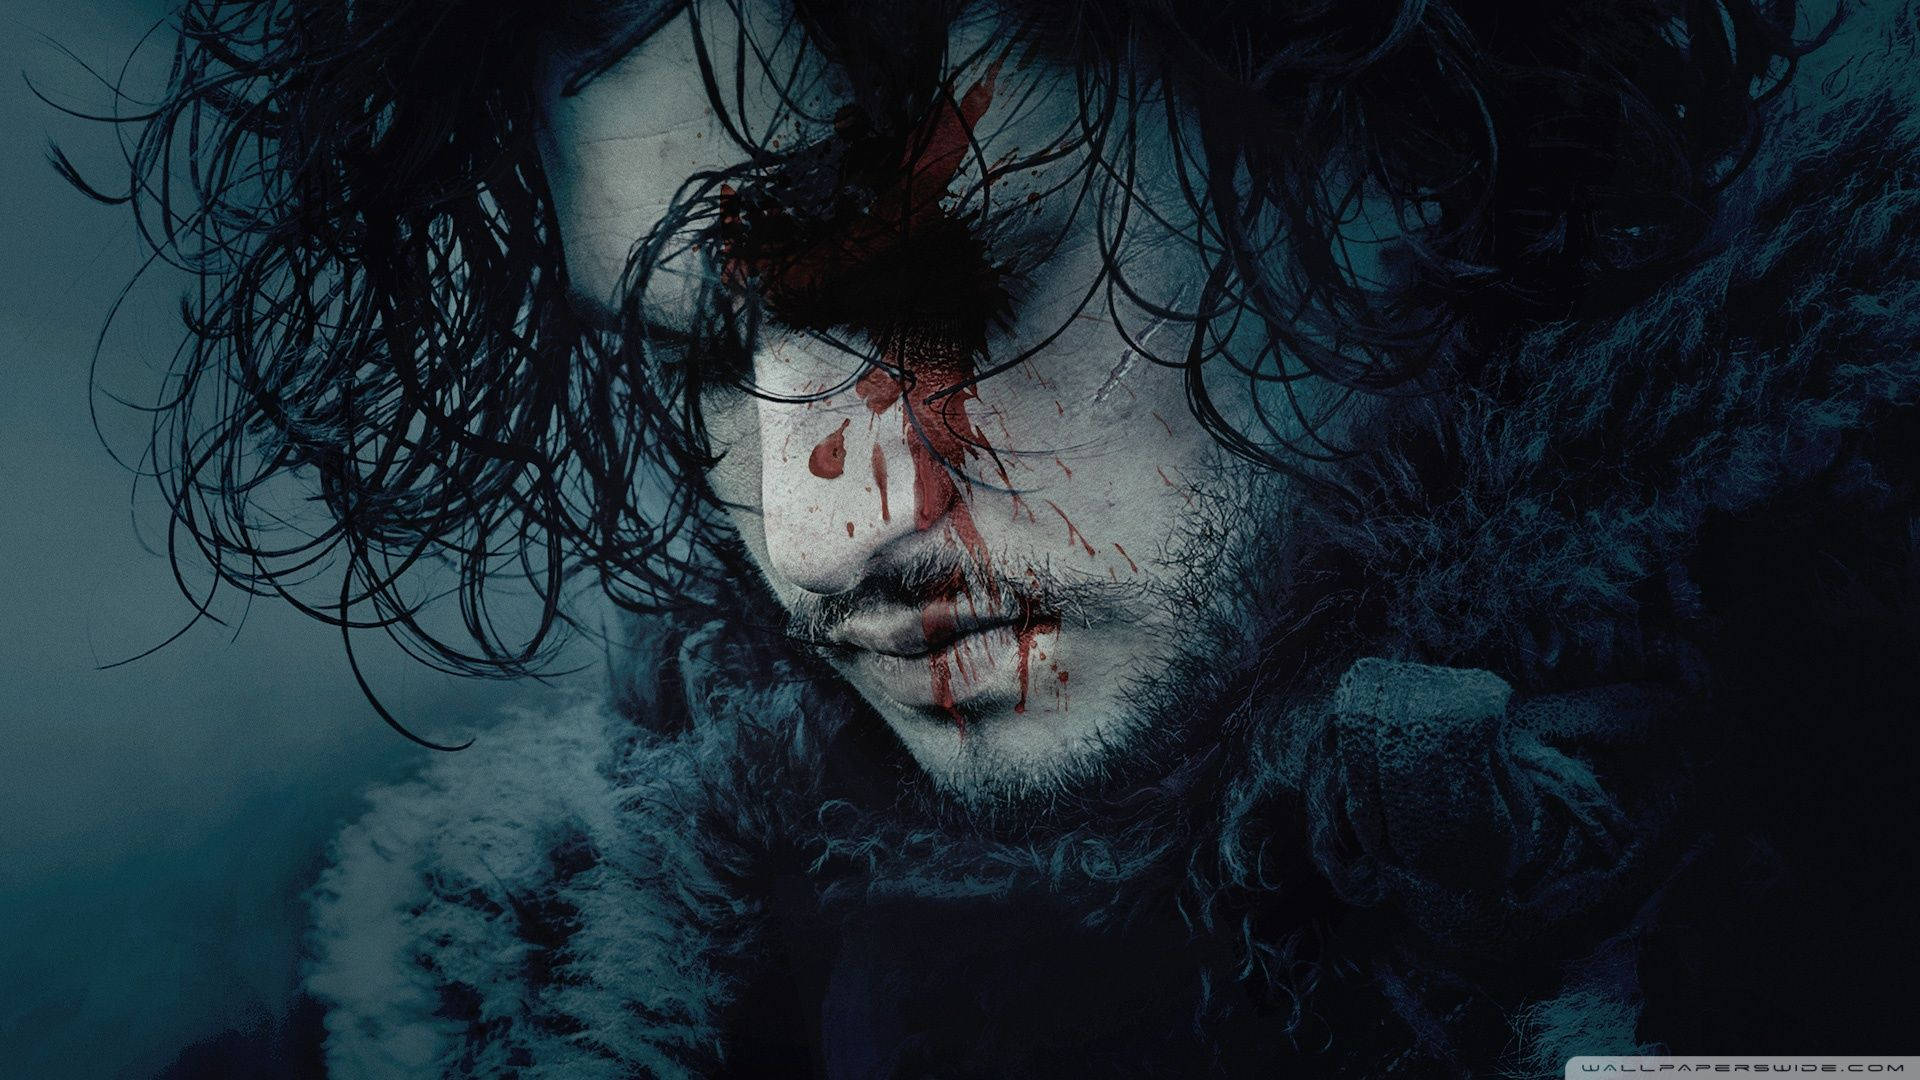 Hd Jon Snow Of Game Of Thrones